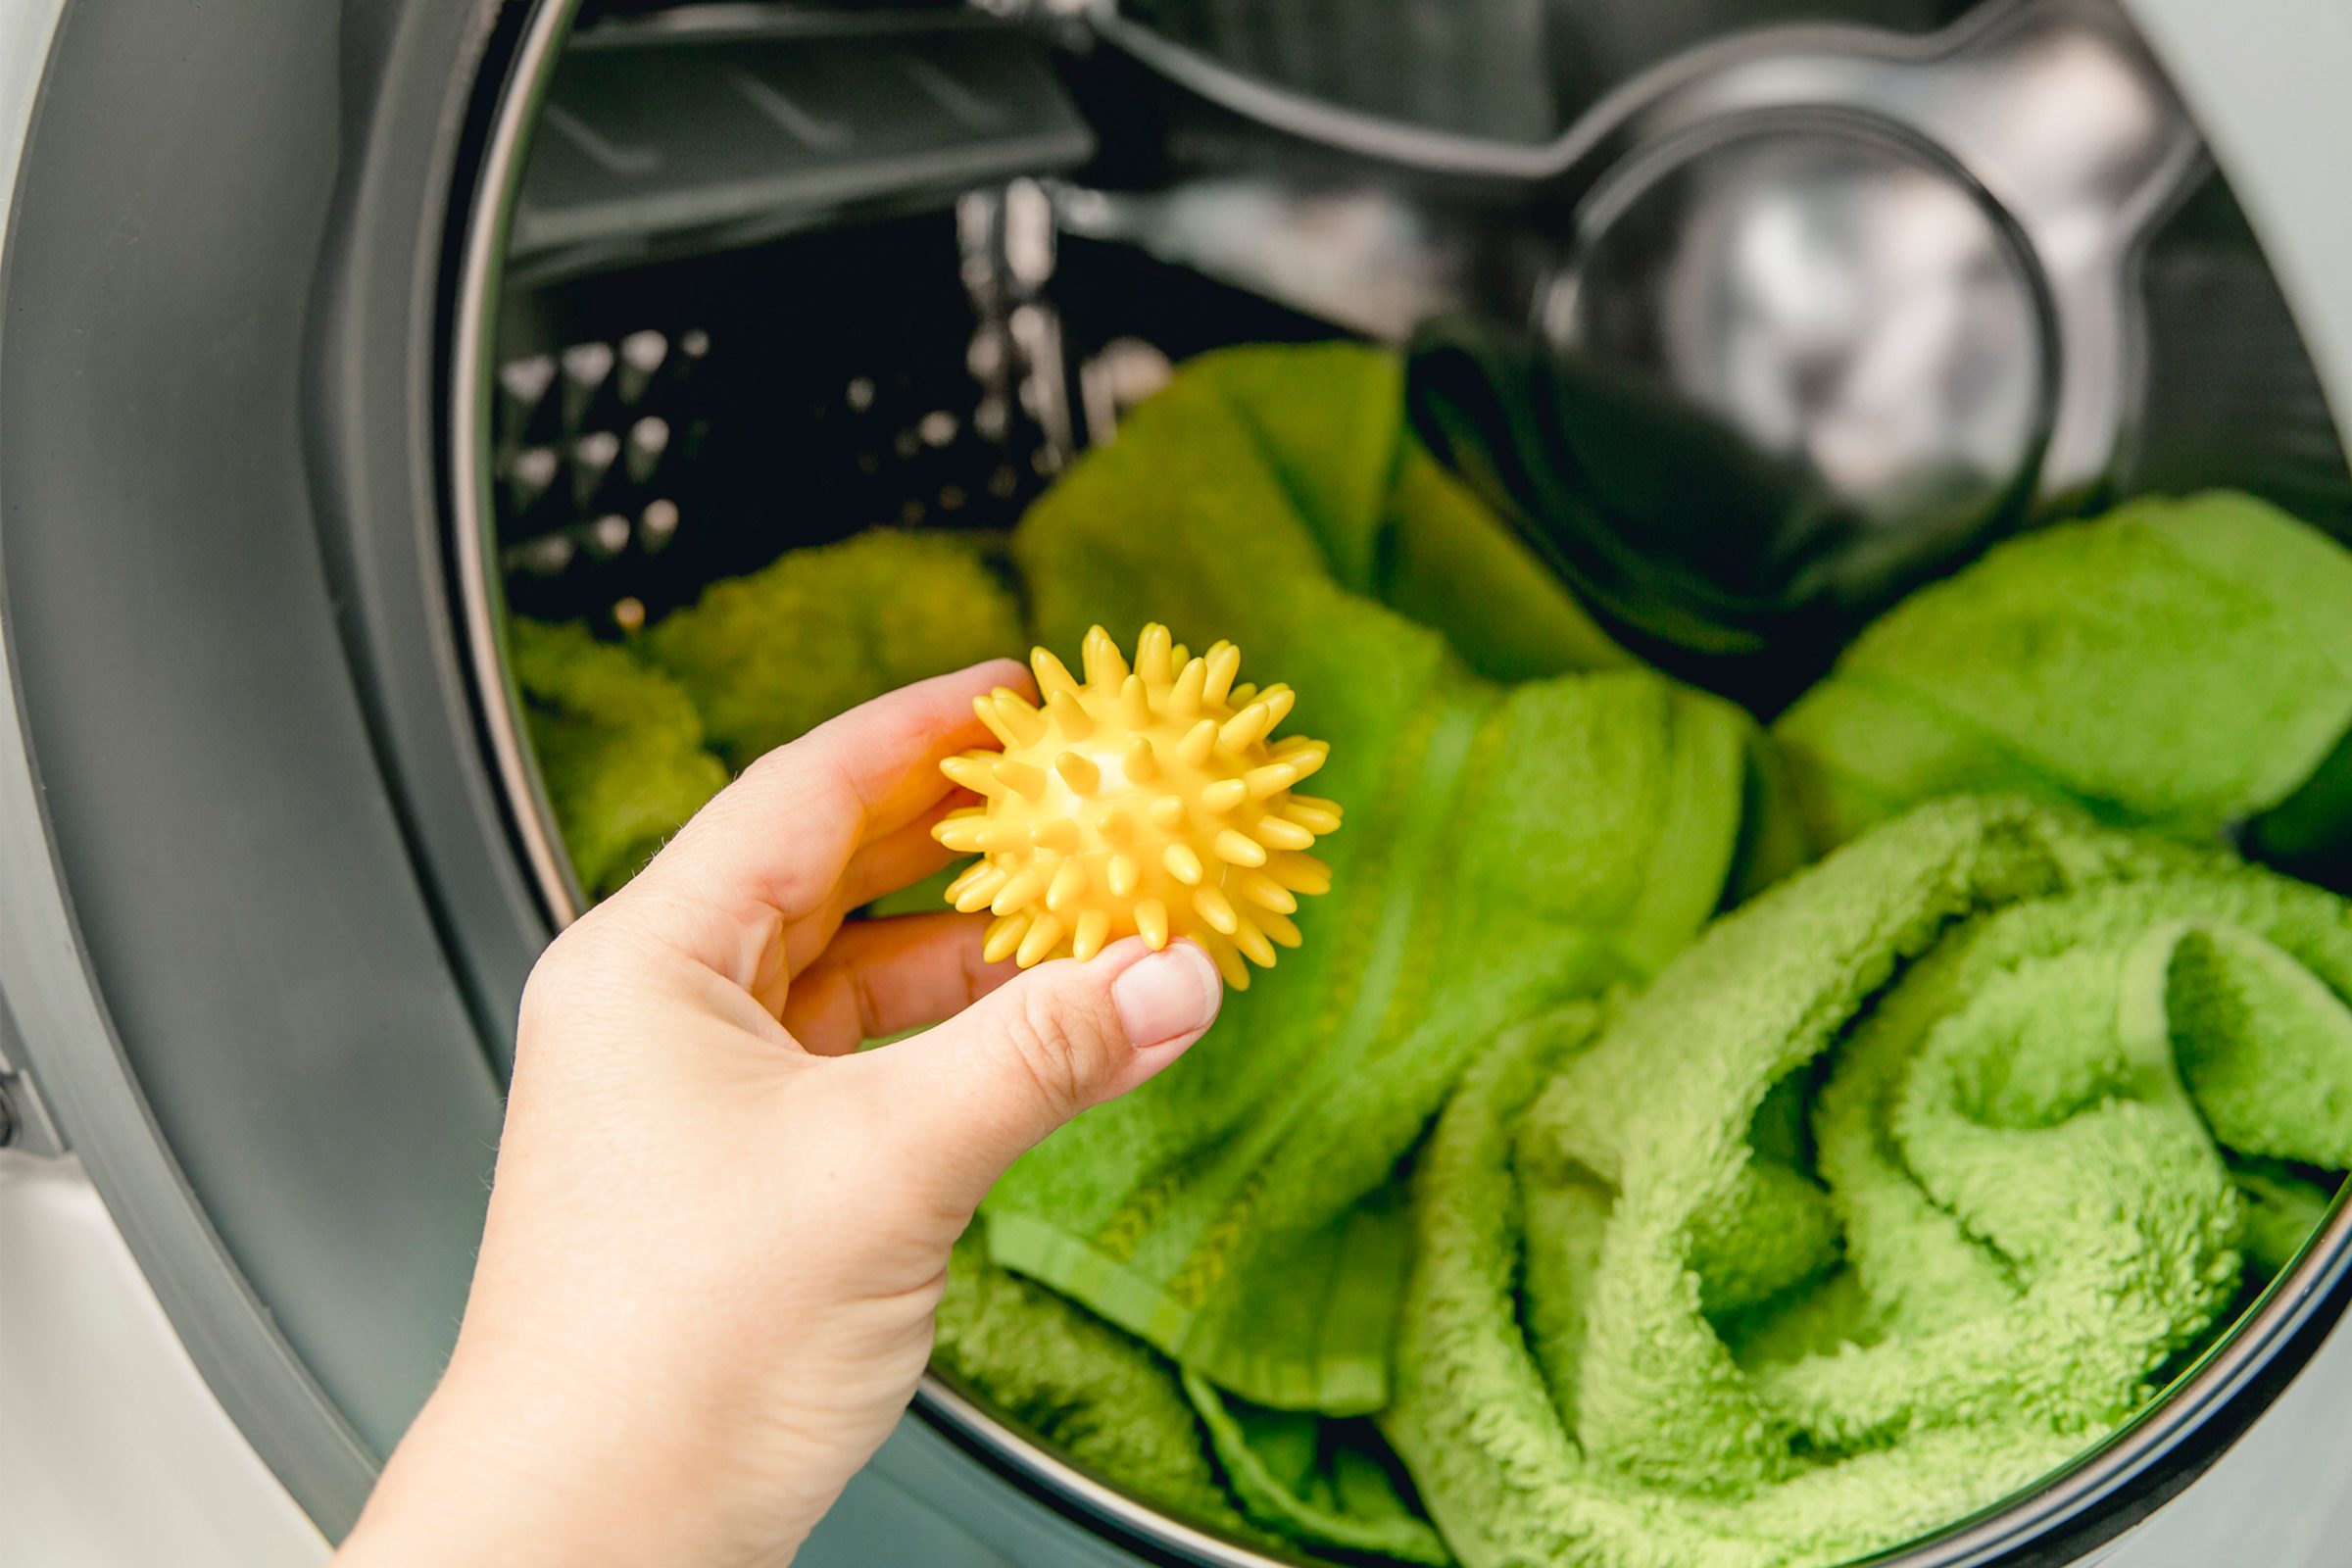 https://www.rd.com/wp-content/uploads/2019/09/9-Best-Dryer-Balls-to-Reduce-Drying-Time-Opener.jpg